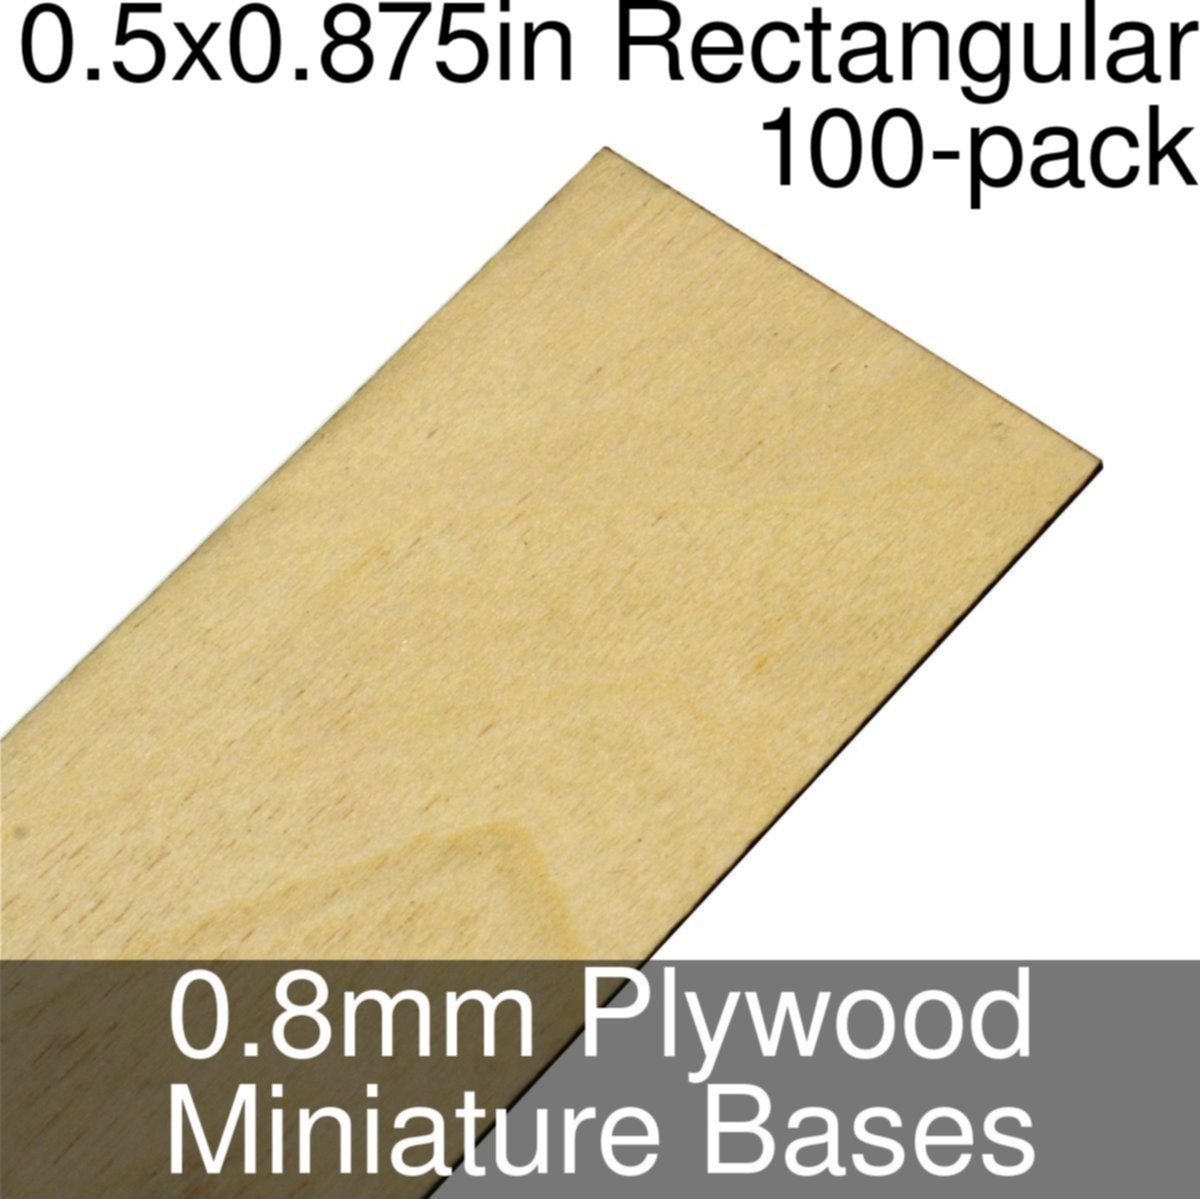 0.5x0.875-inch rectangular miniature bases